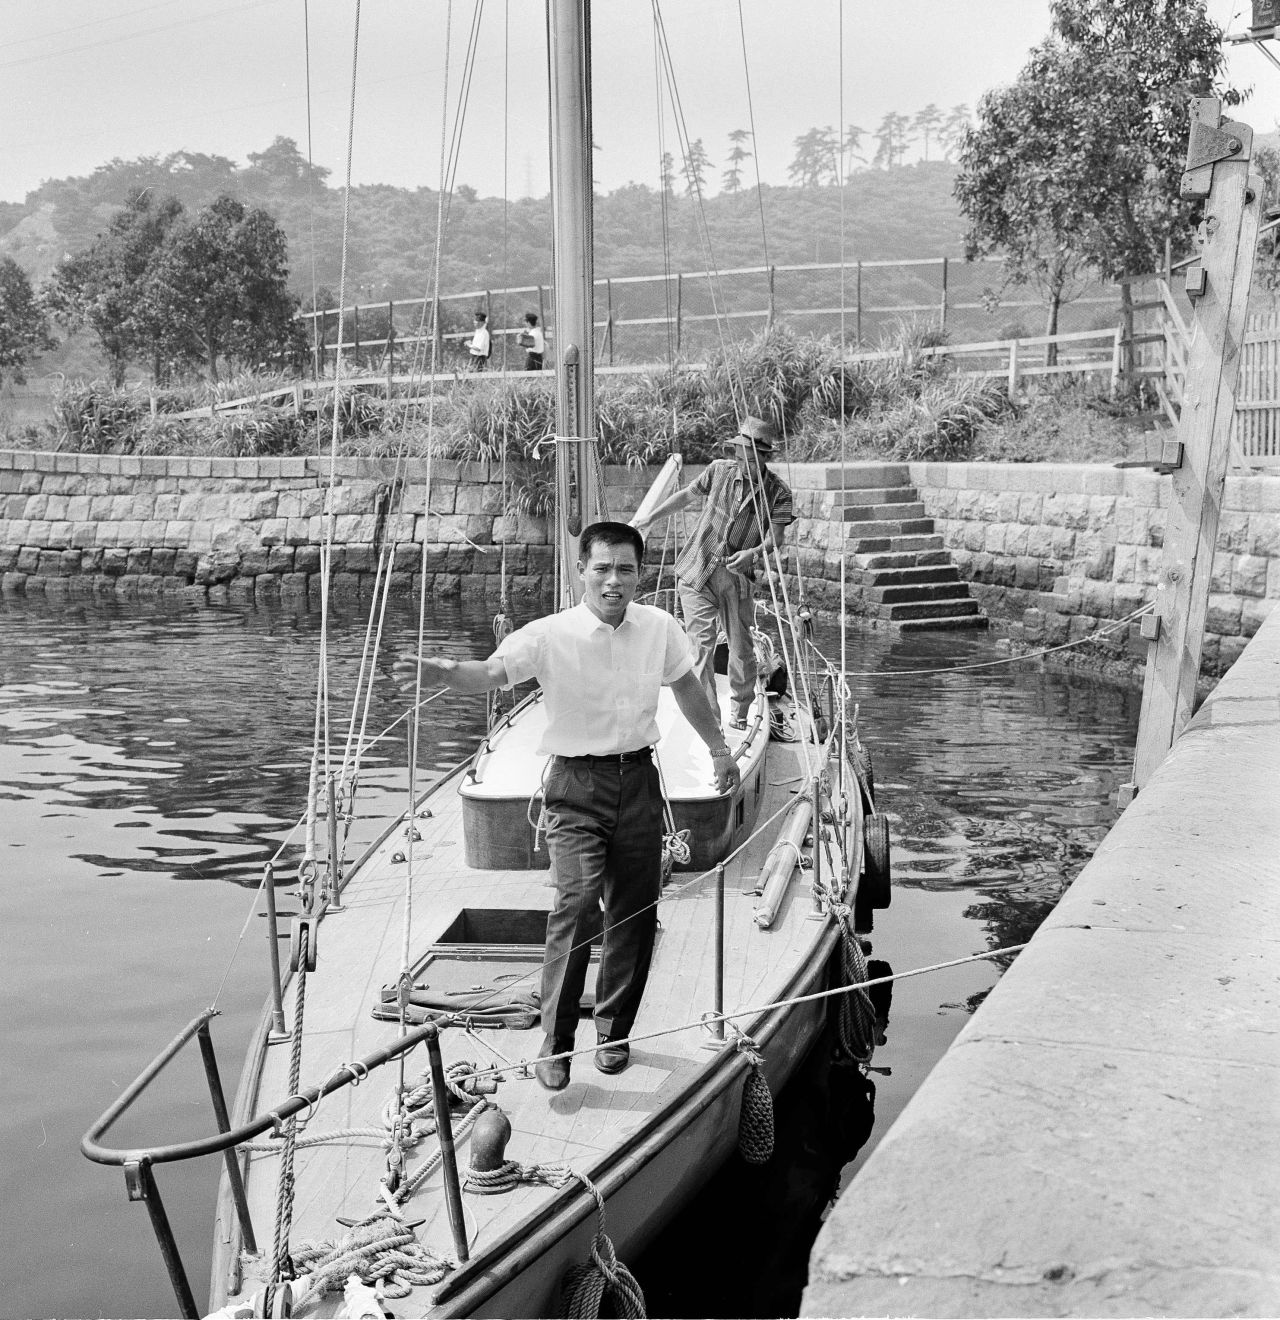 Kenichi Horie on board the Mermaid II in 1963.